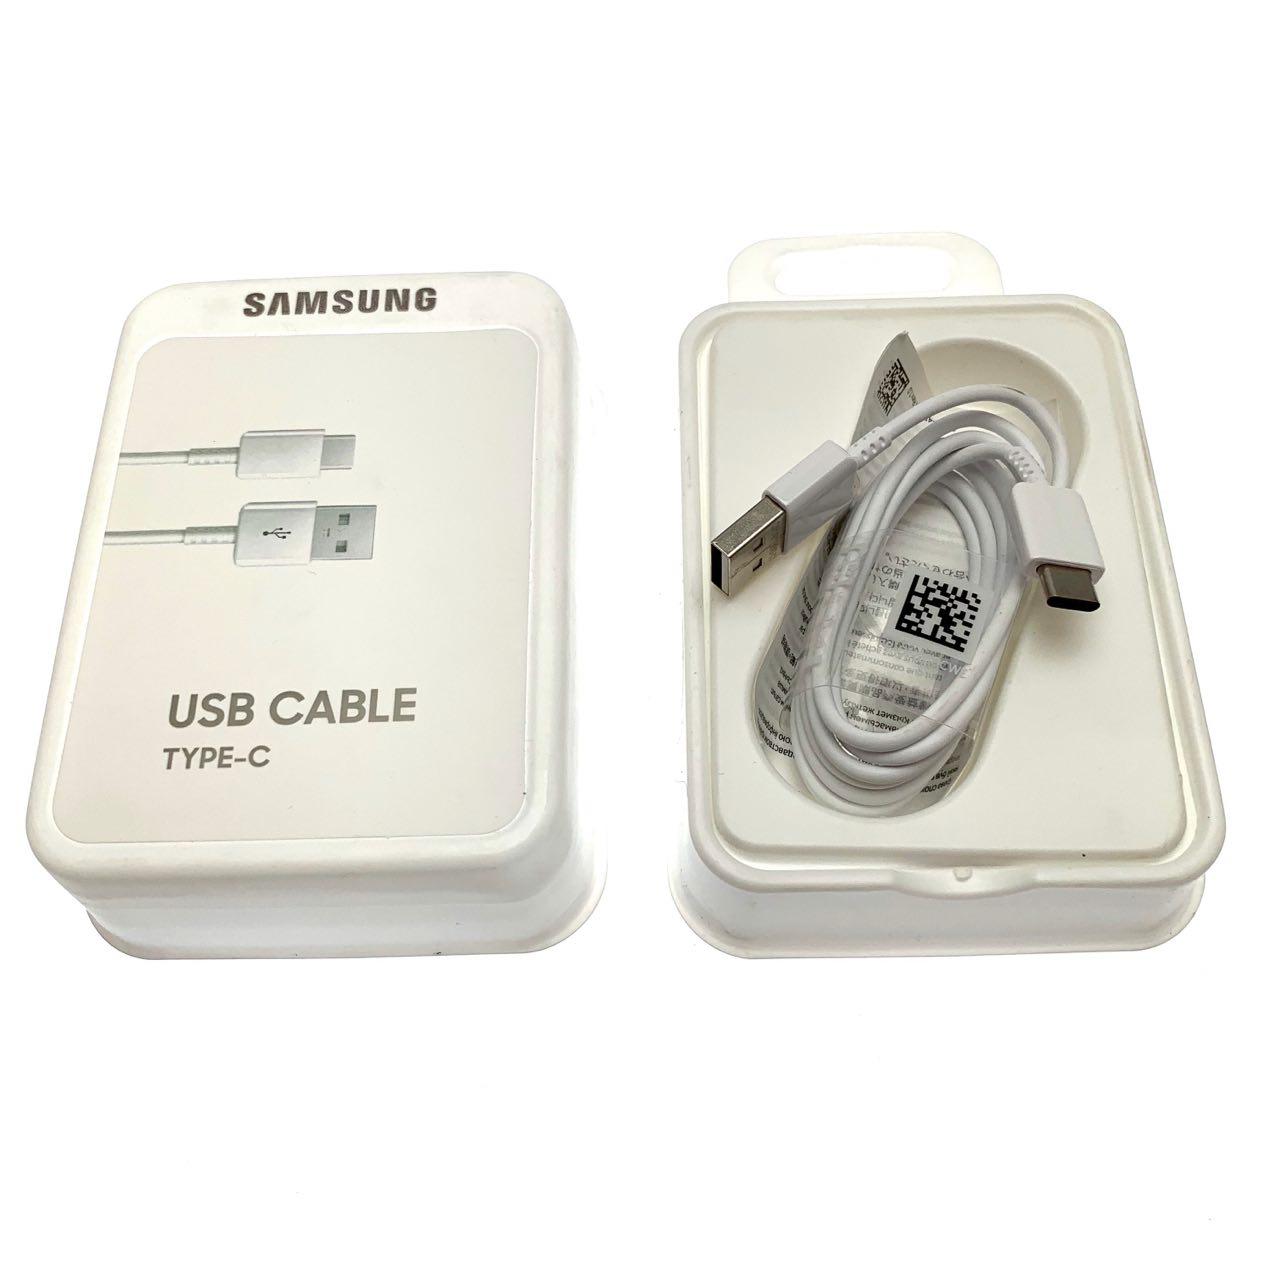 Дата-кабель Samsung USB - USB Type-C, 1.5 м, EP-DG930IBEGWW, цвет белый.